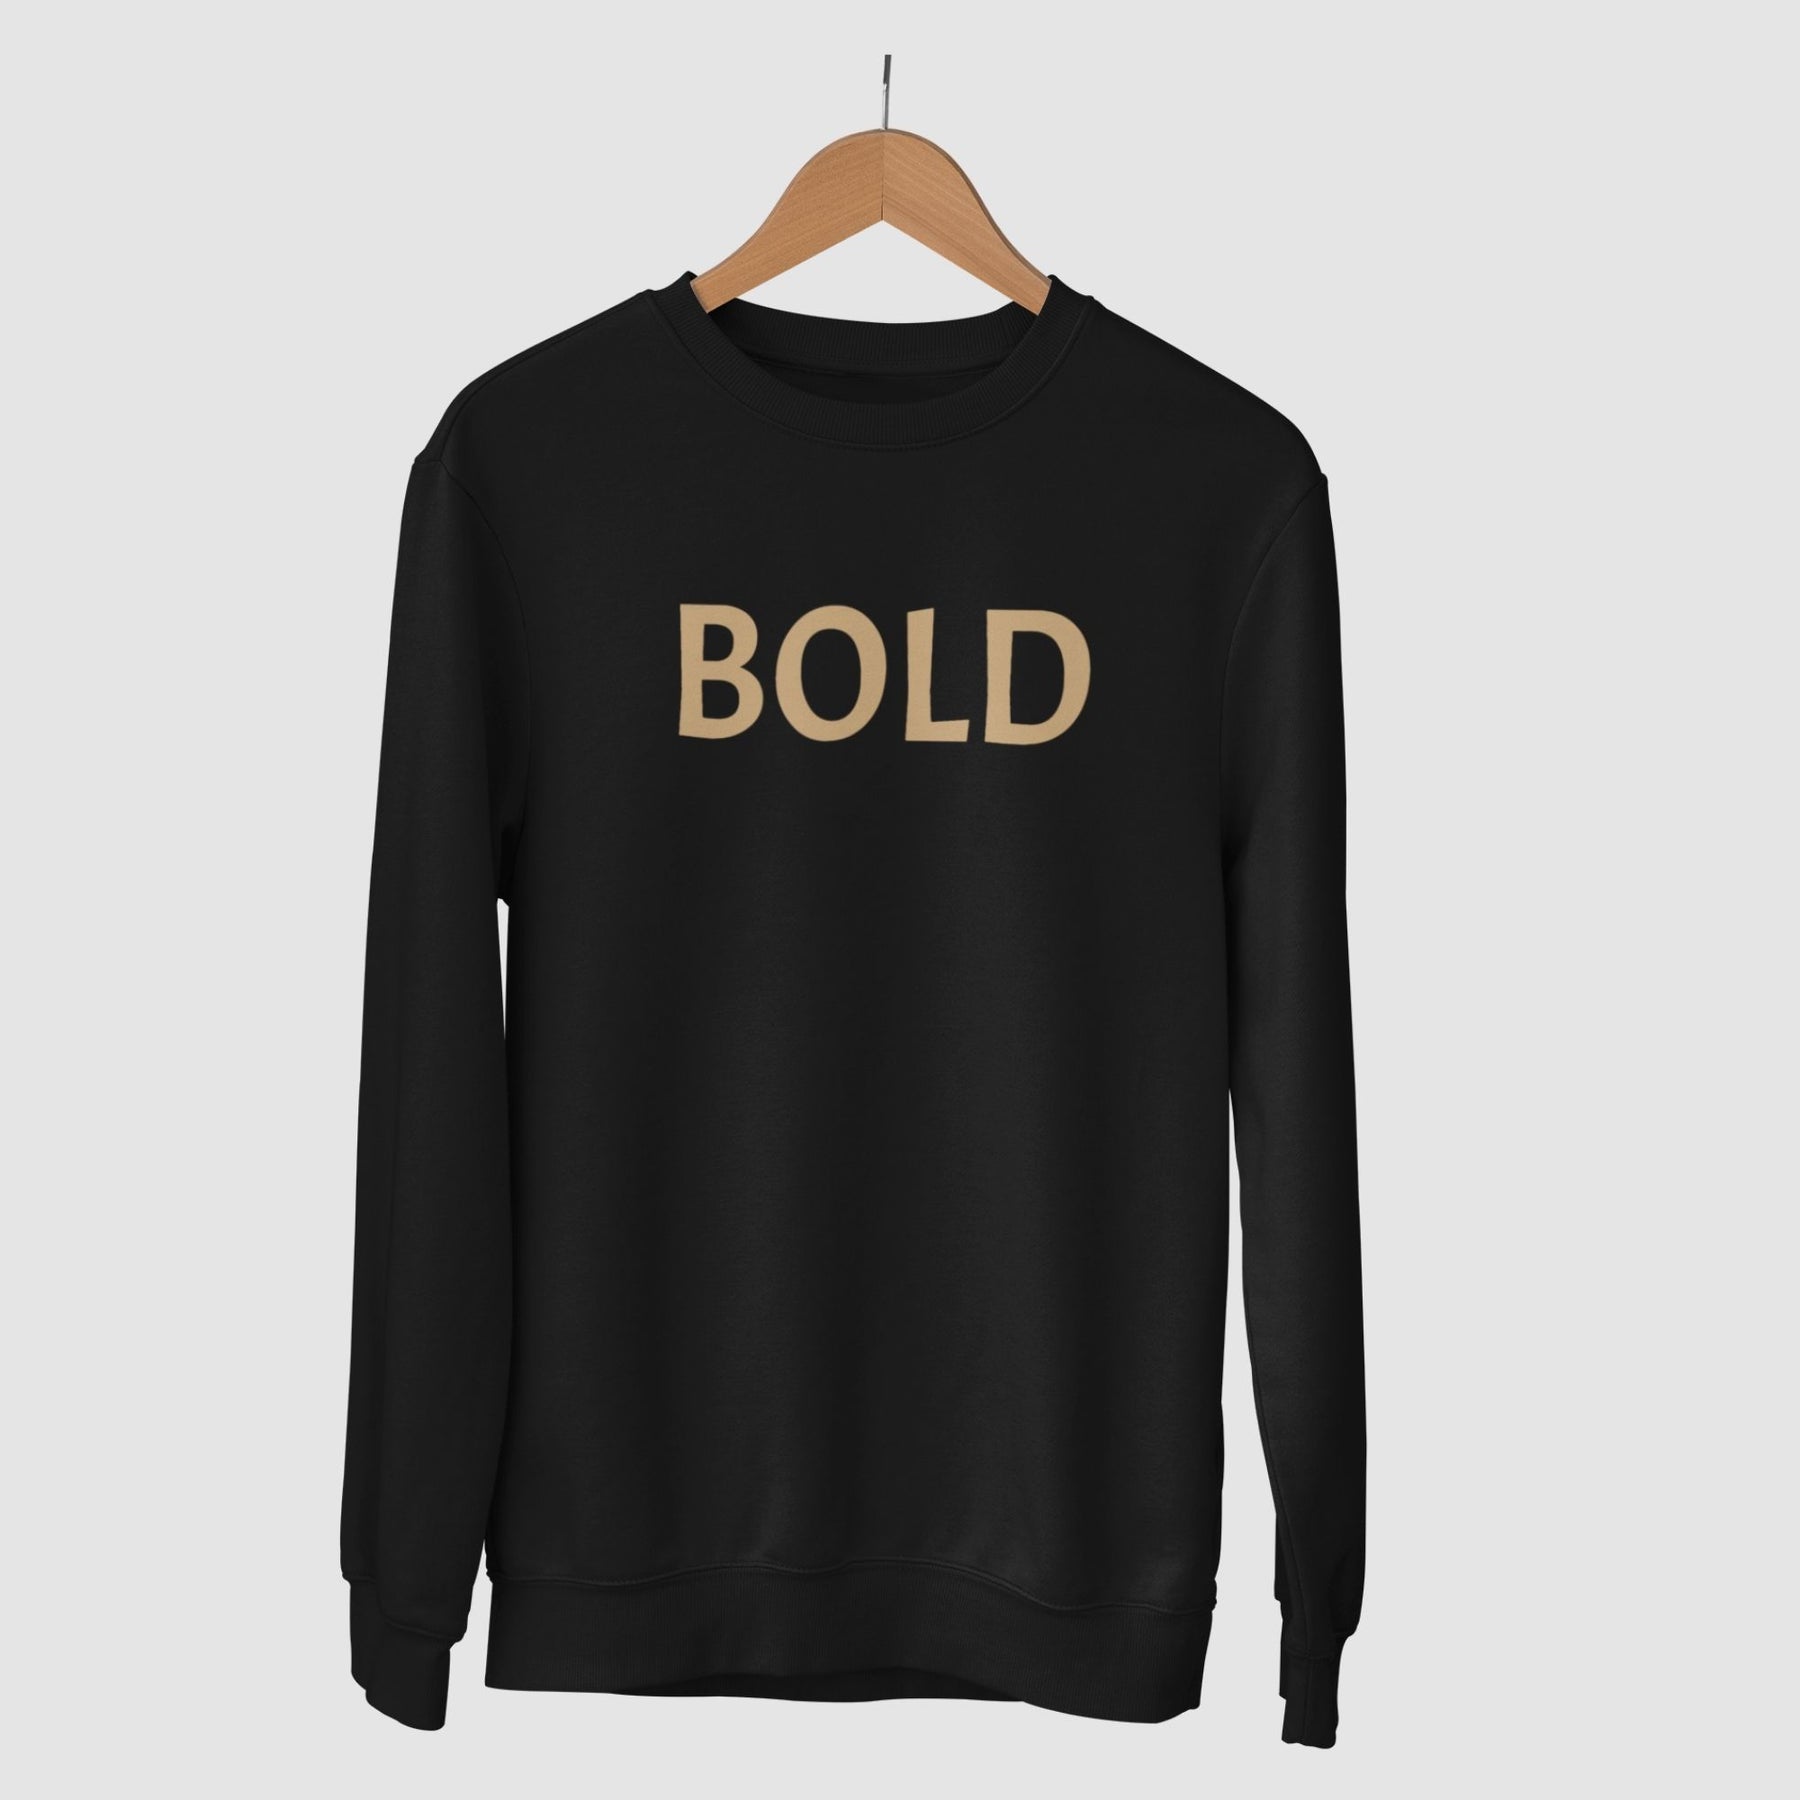 bold-cotton-printed-unisex-black-sweatshirt-gogirgit-com